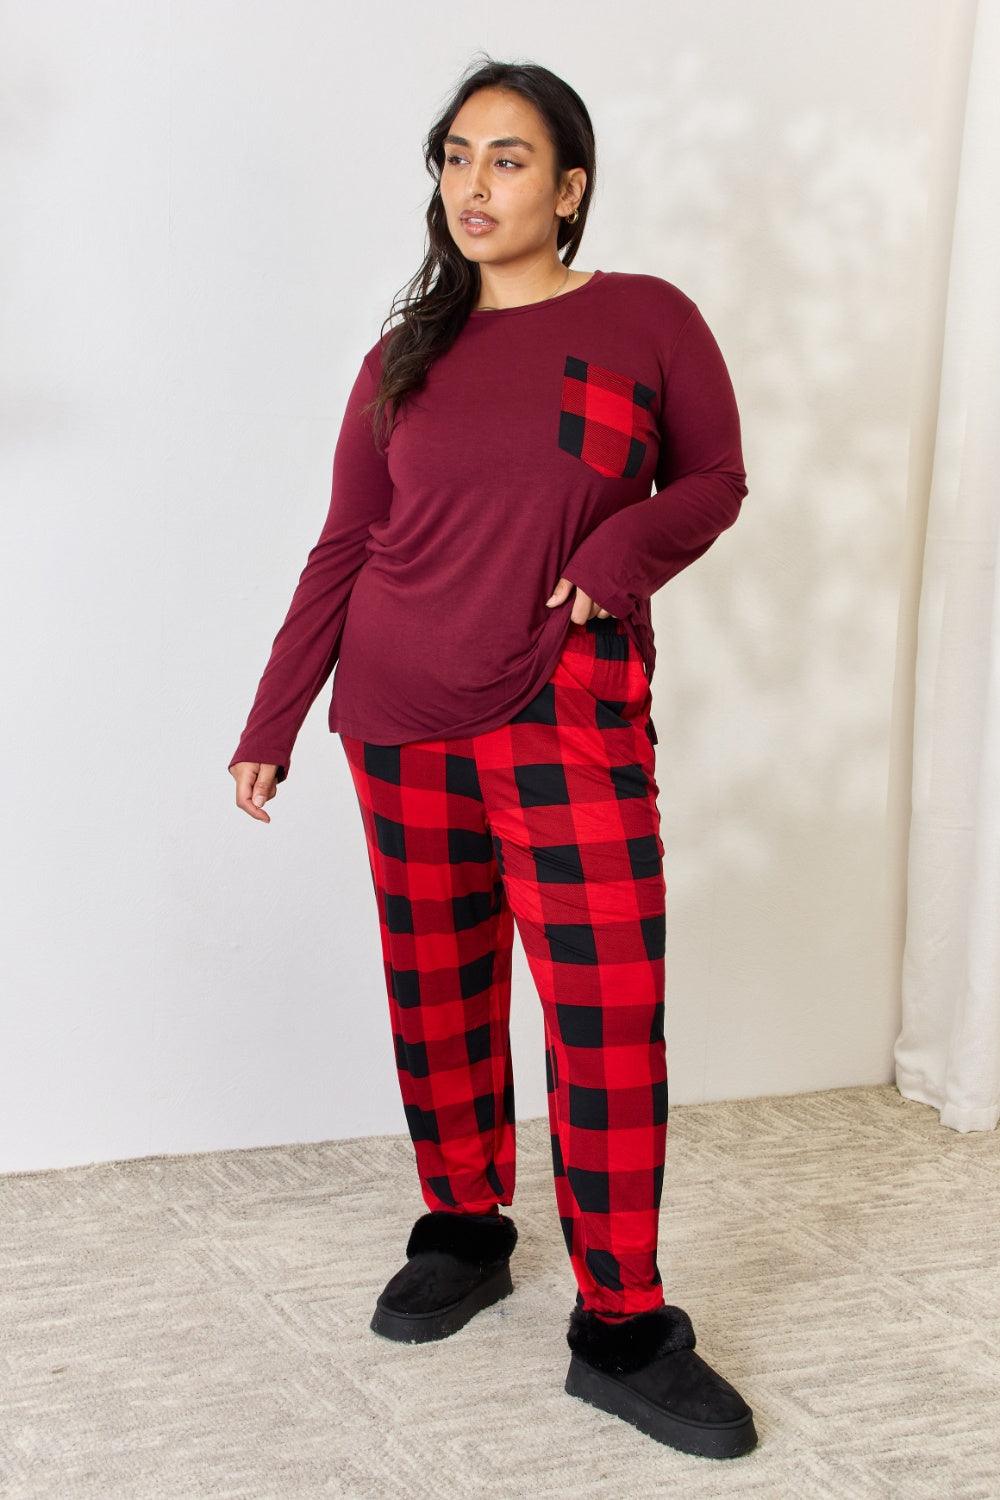 Bona Fide Fashion - Full Size Plaid Round Neck Top and Bottom Pajama Set - Women Fashion - Bona Fide Fashion